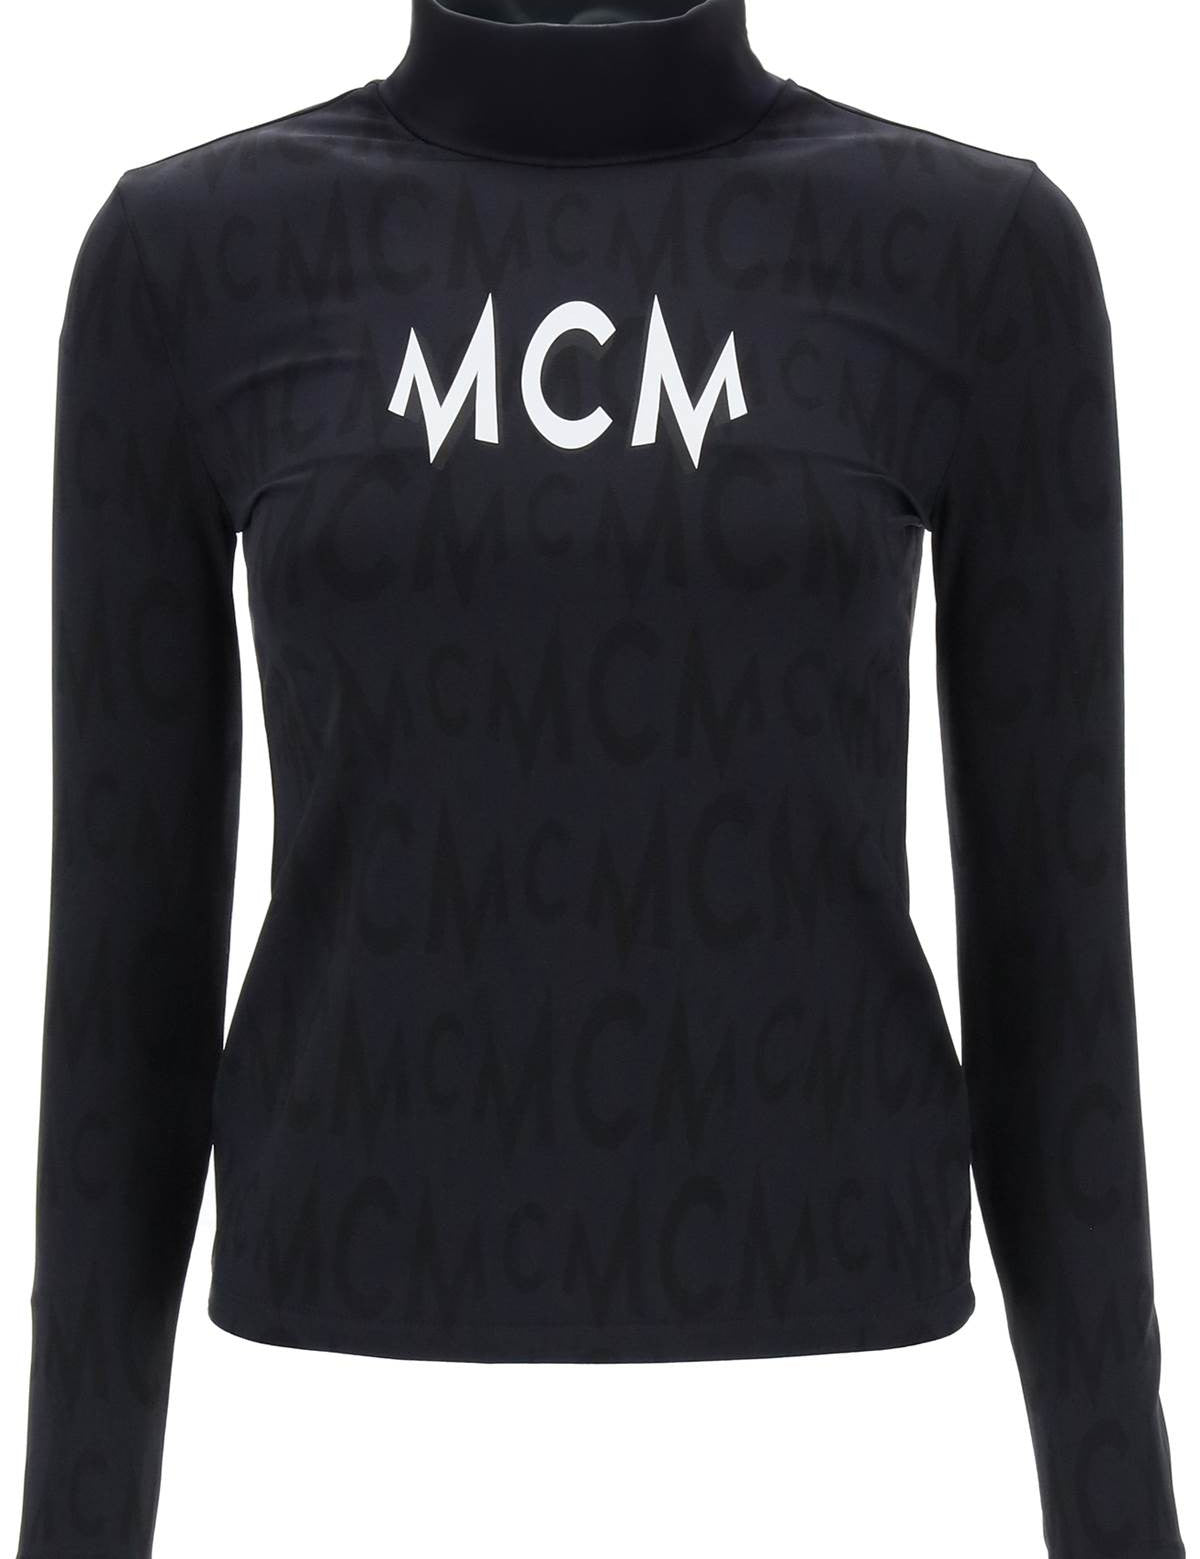 mcm-long-sleeved-top-with-logo-pattern.jpg